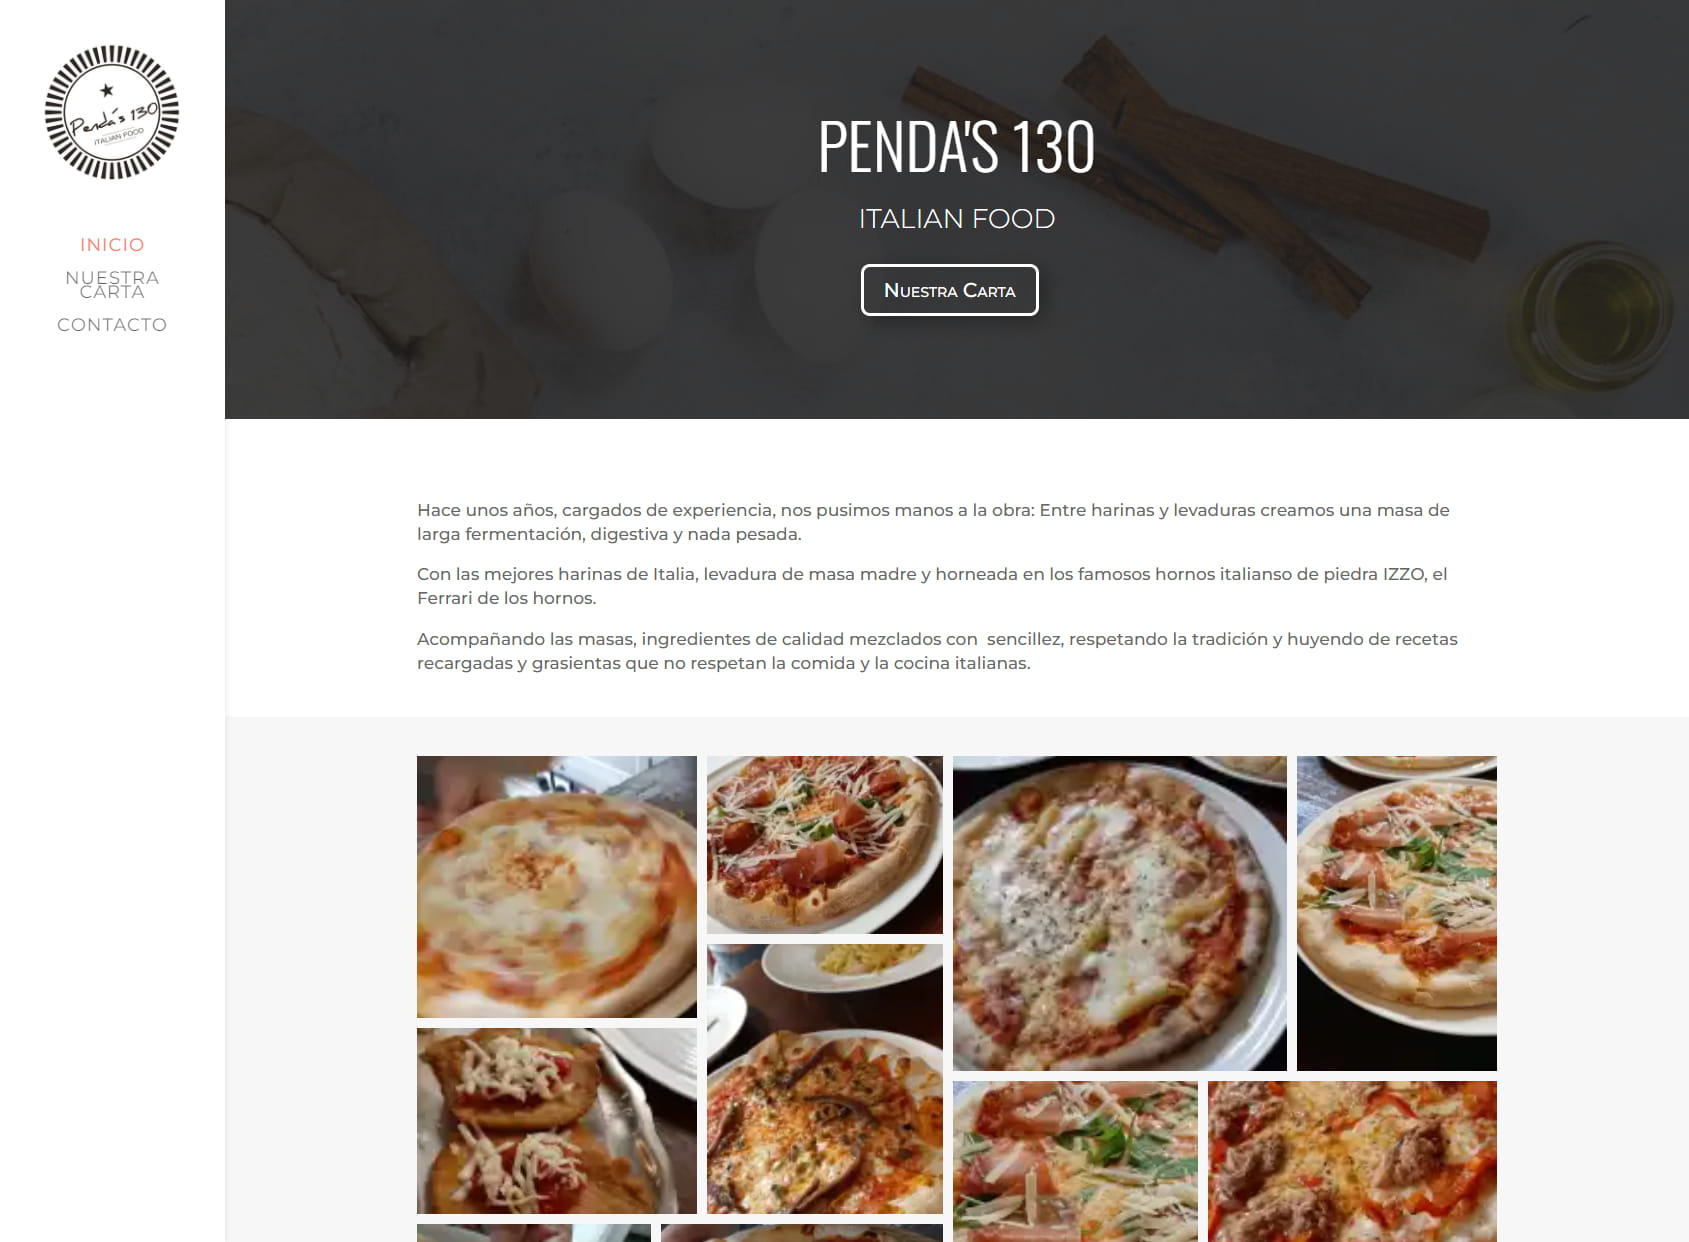 Penda's 130 italian food